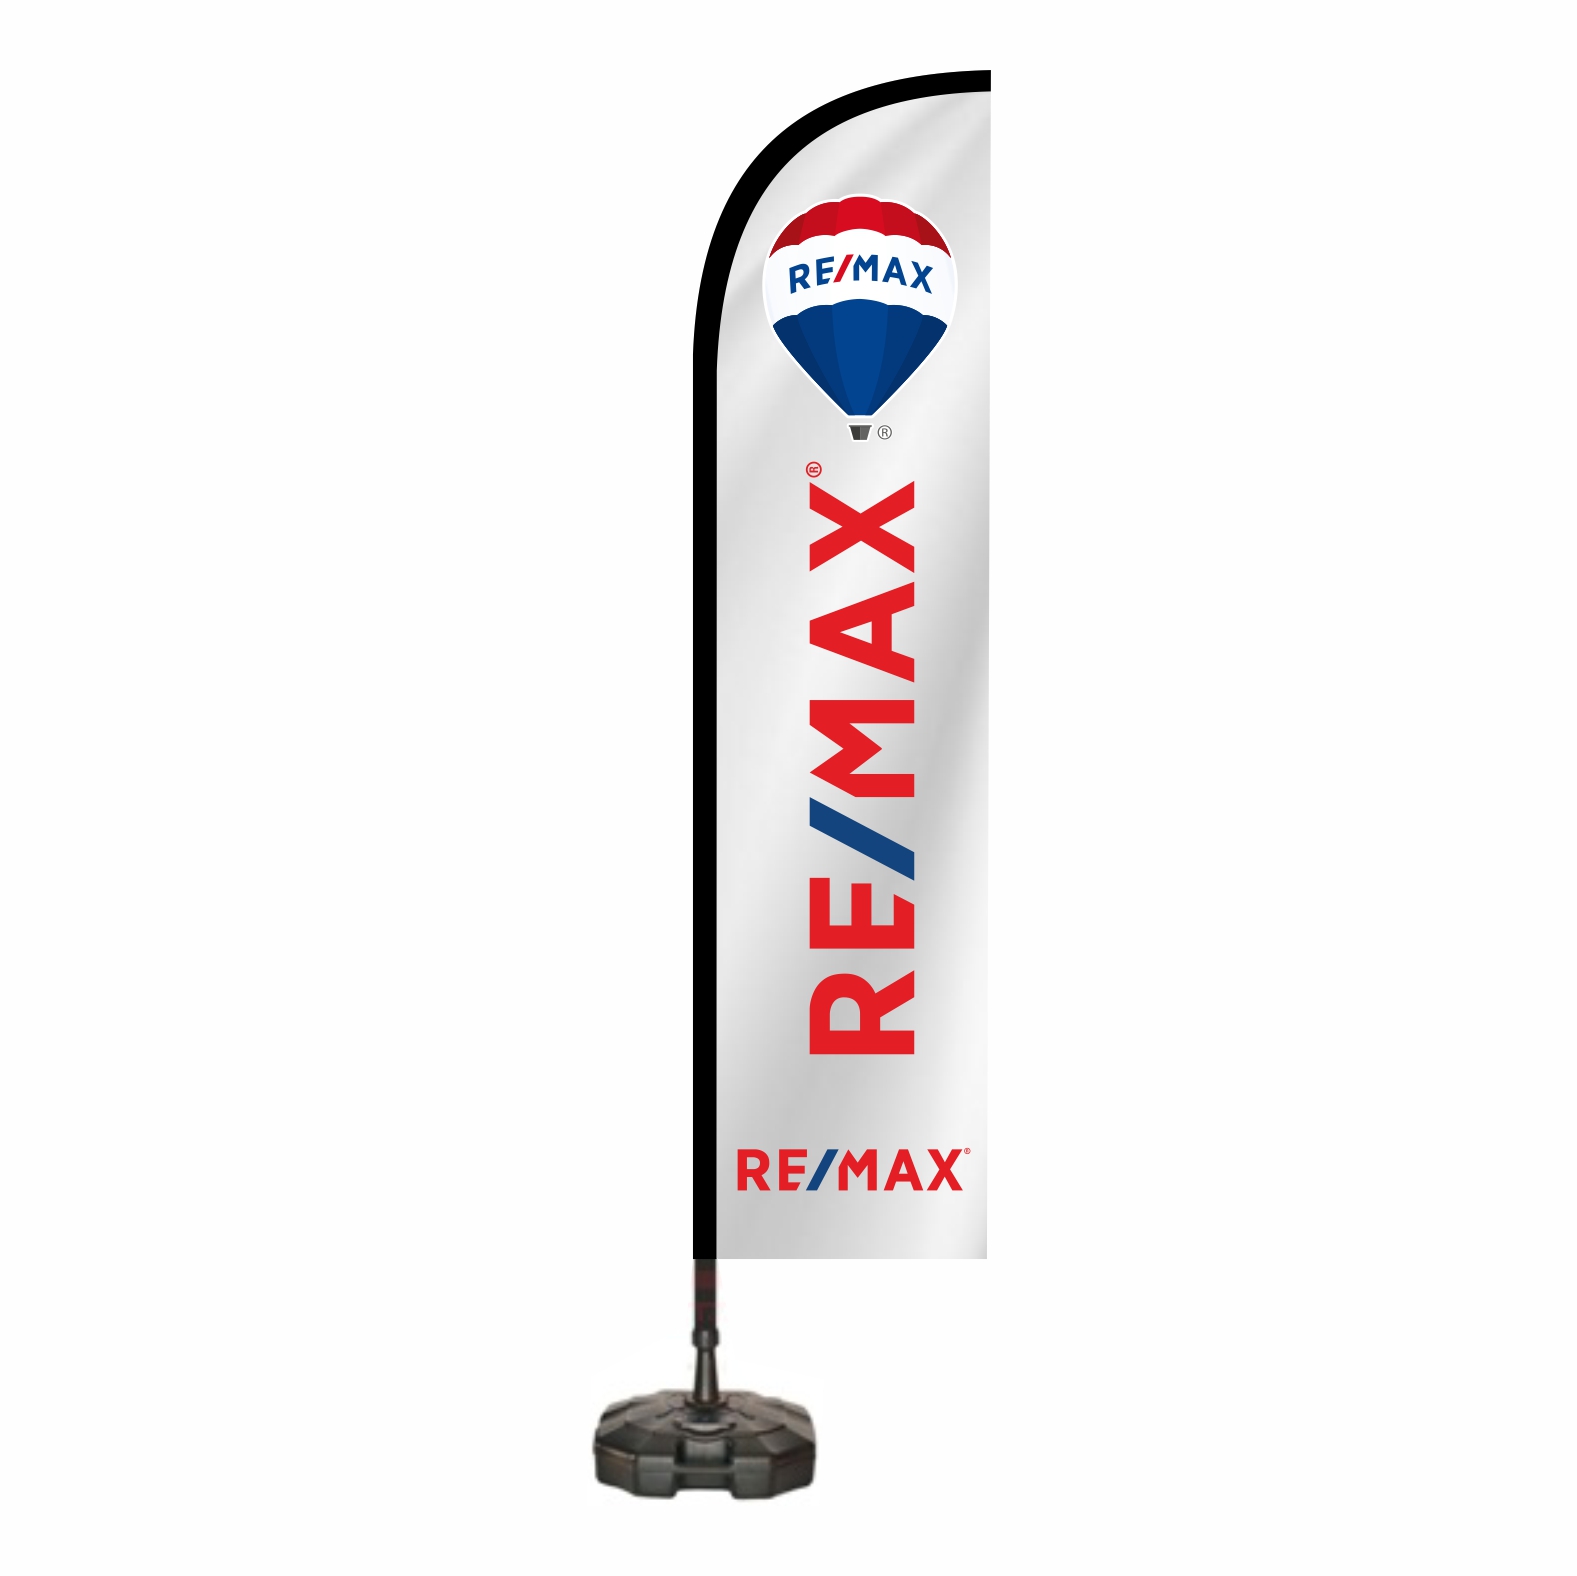 Remax Yol Bayra Fiyat